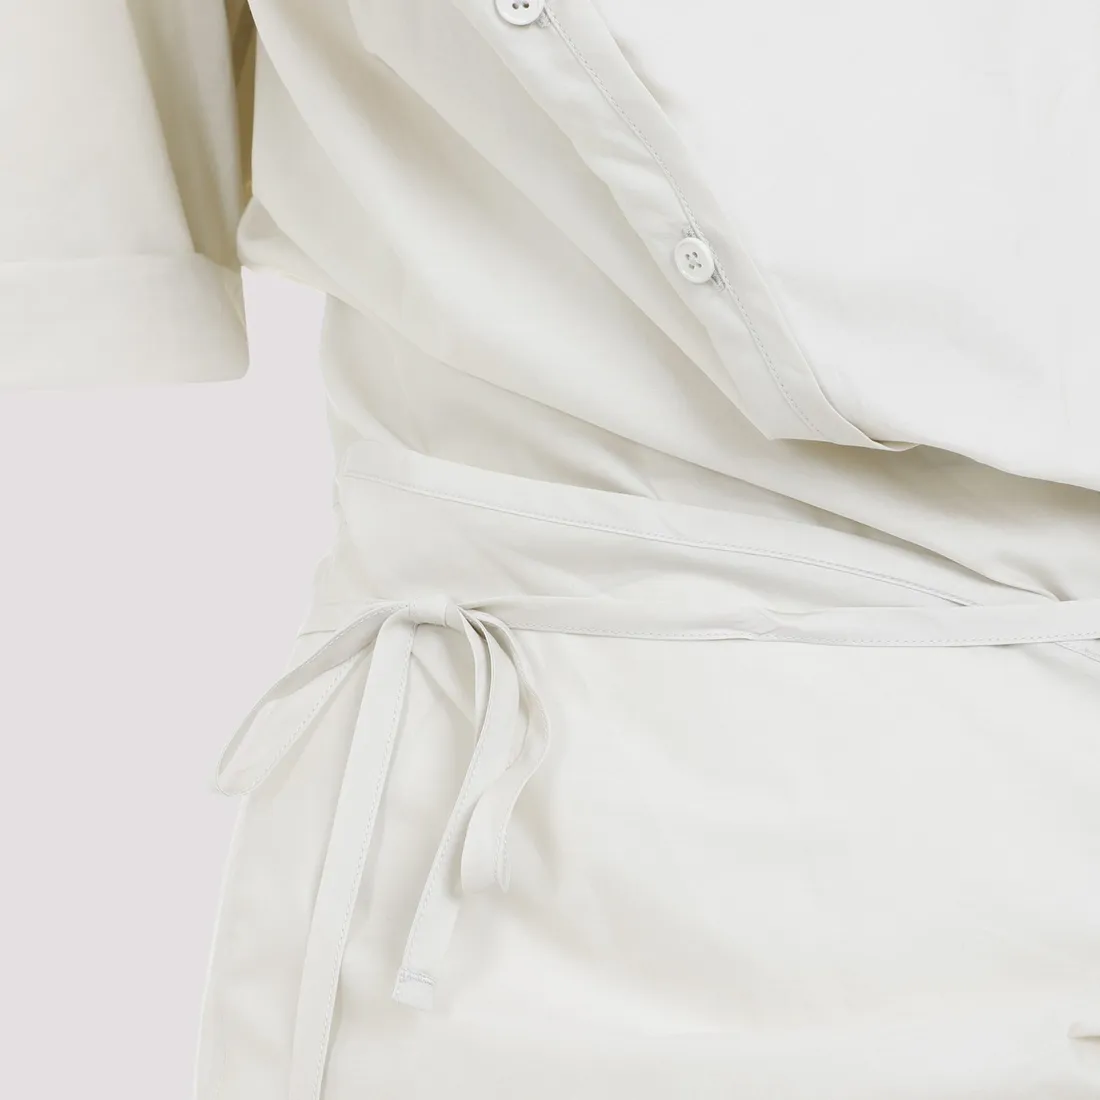 LEMAIRE short-sleeve wrap midi dress - Neutrals